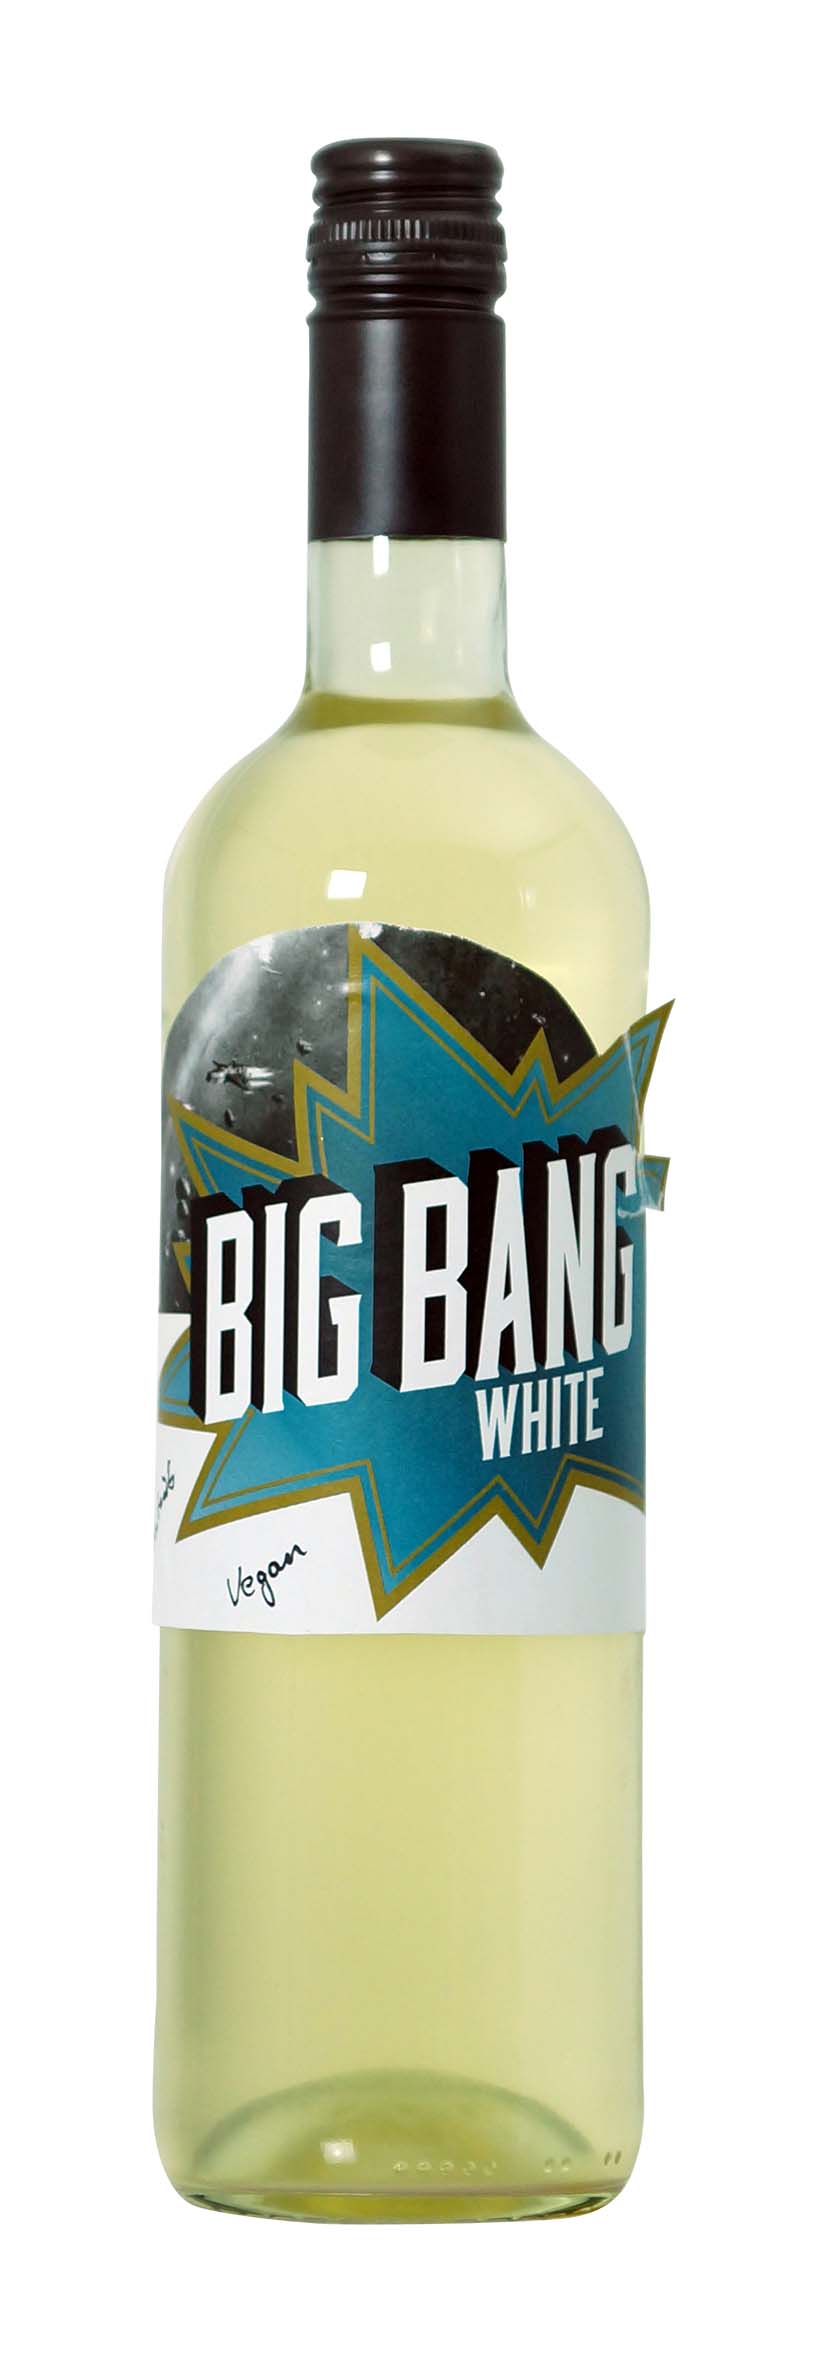 Big Bang White 2015